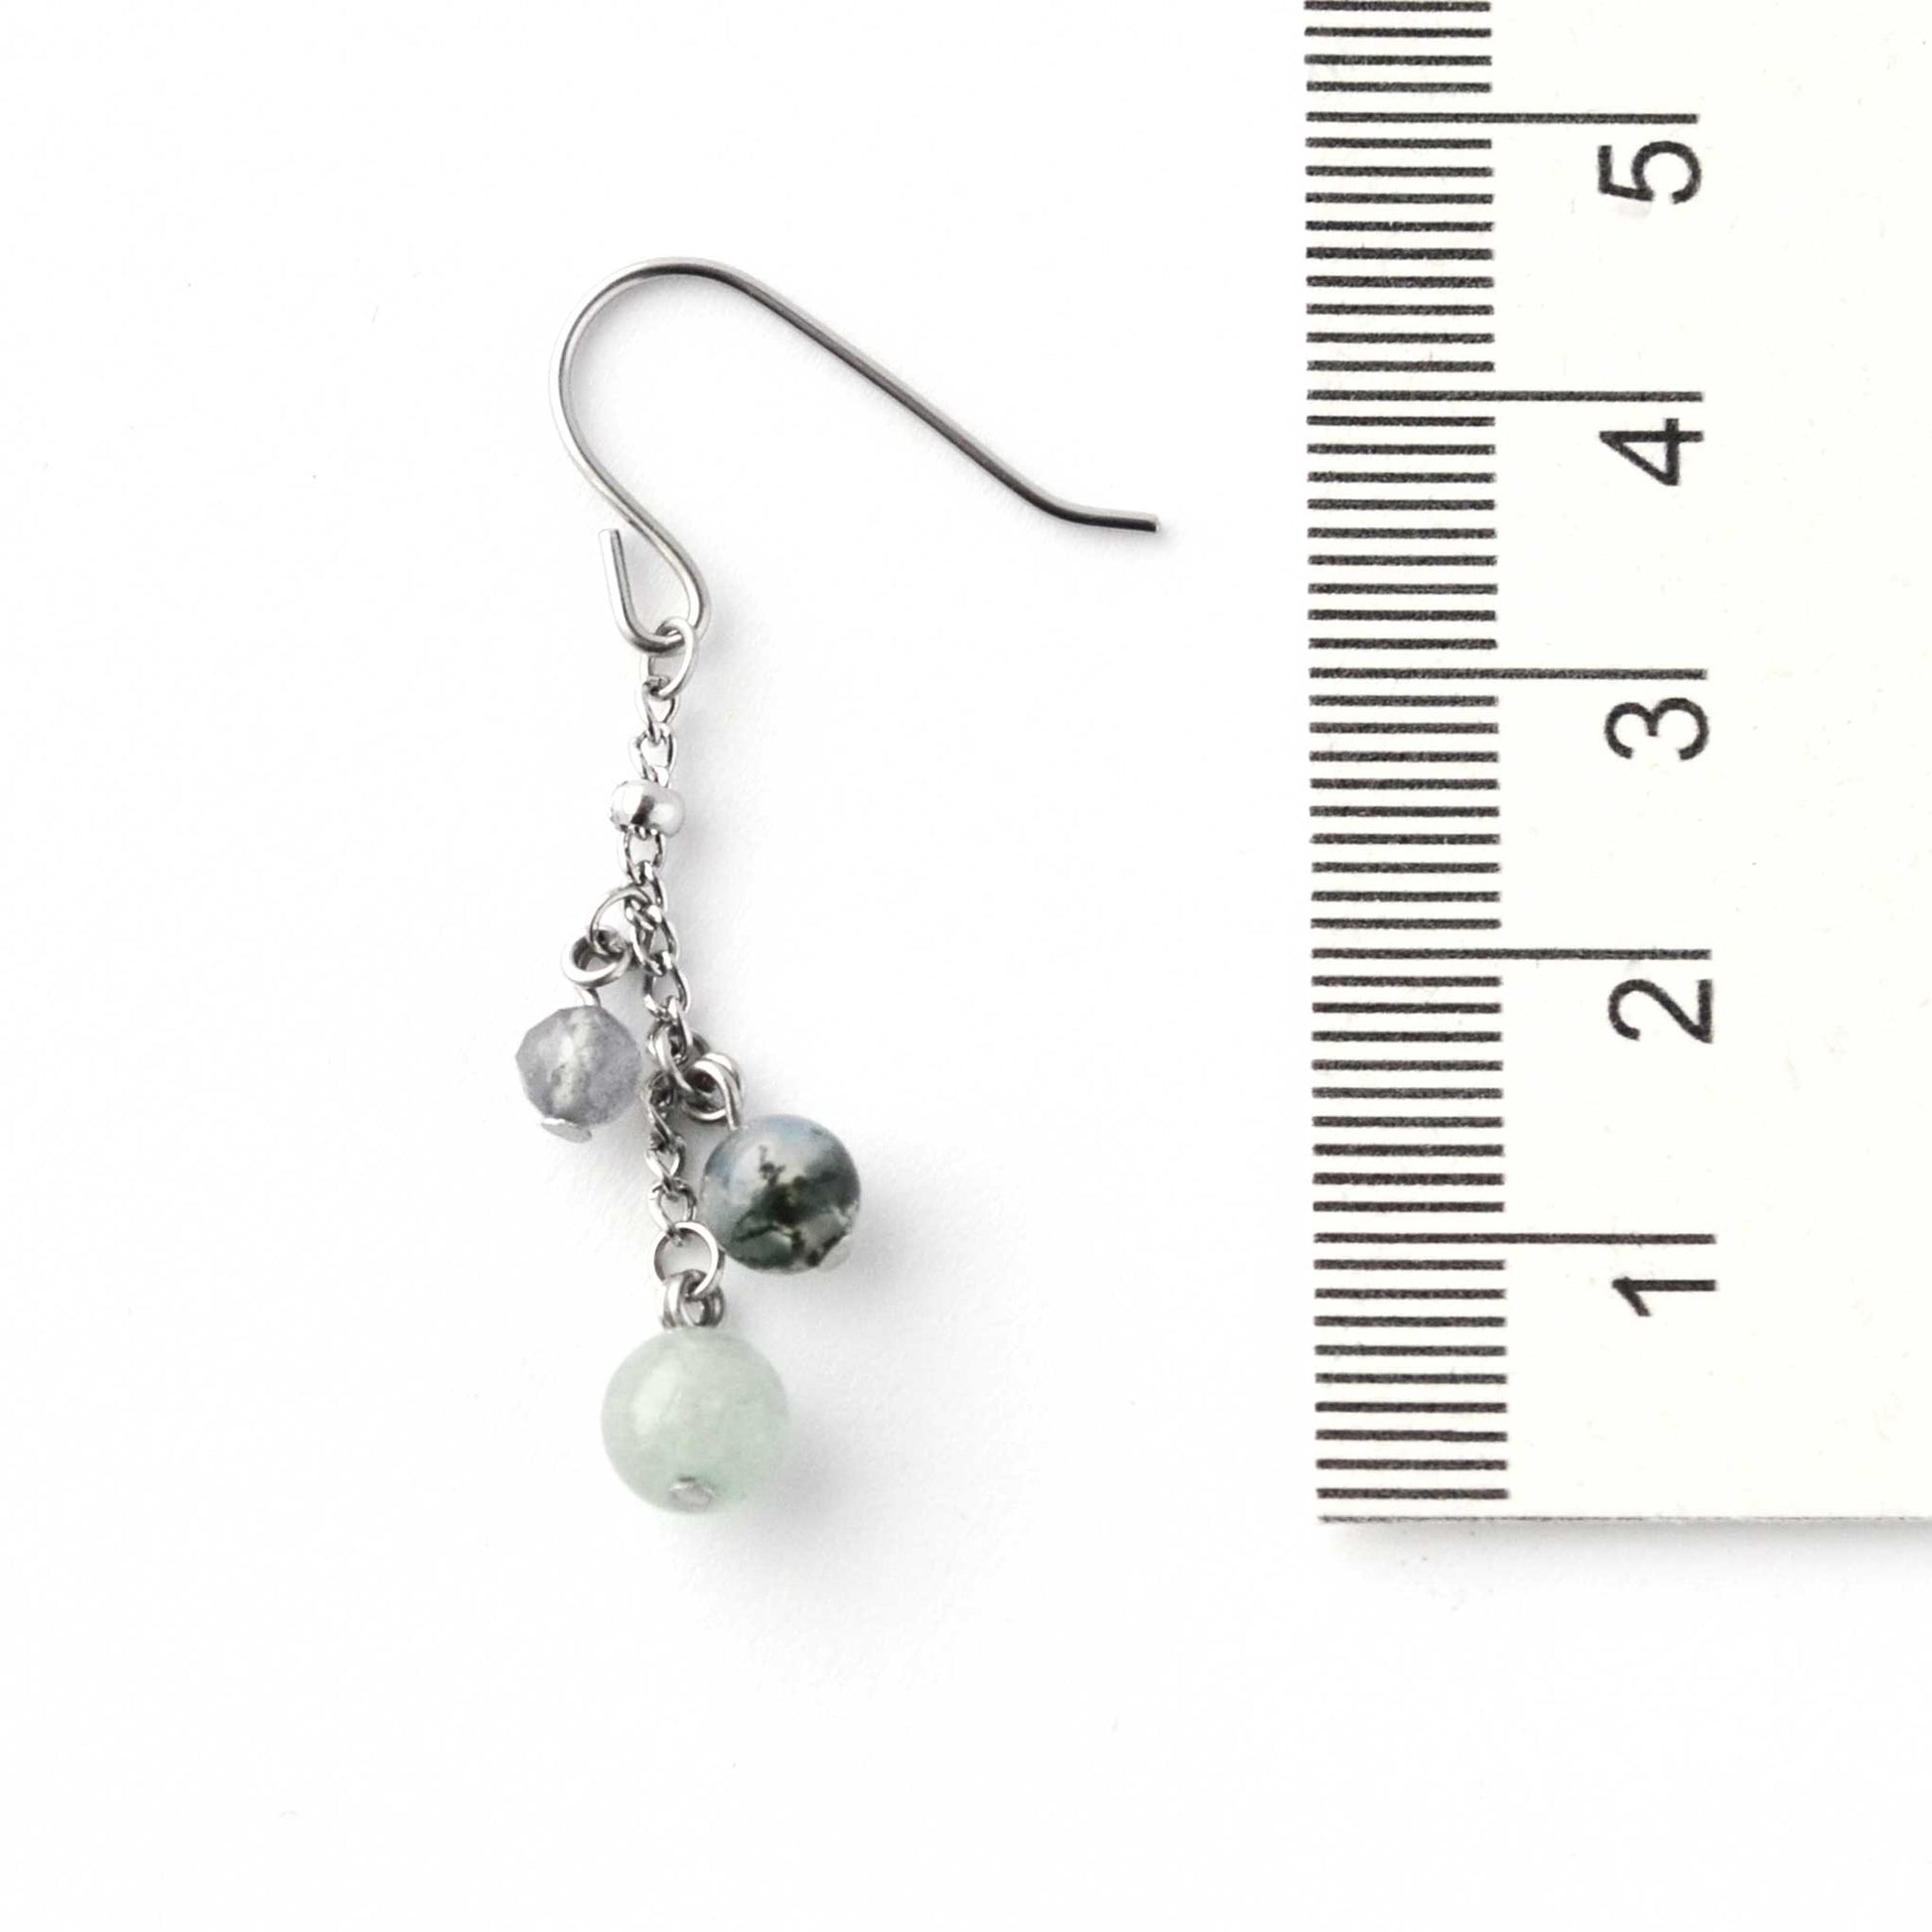 Green gemstone drop earring next to ruler showing 4.5cm length